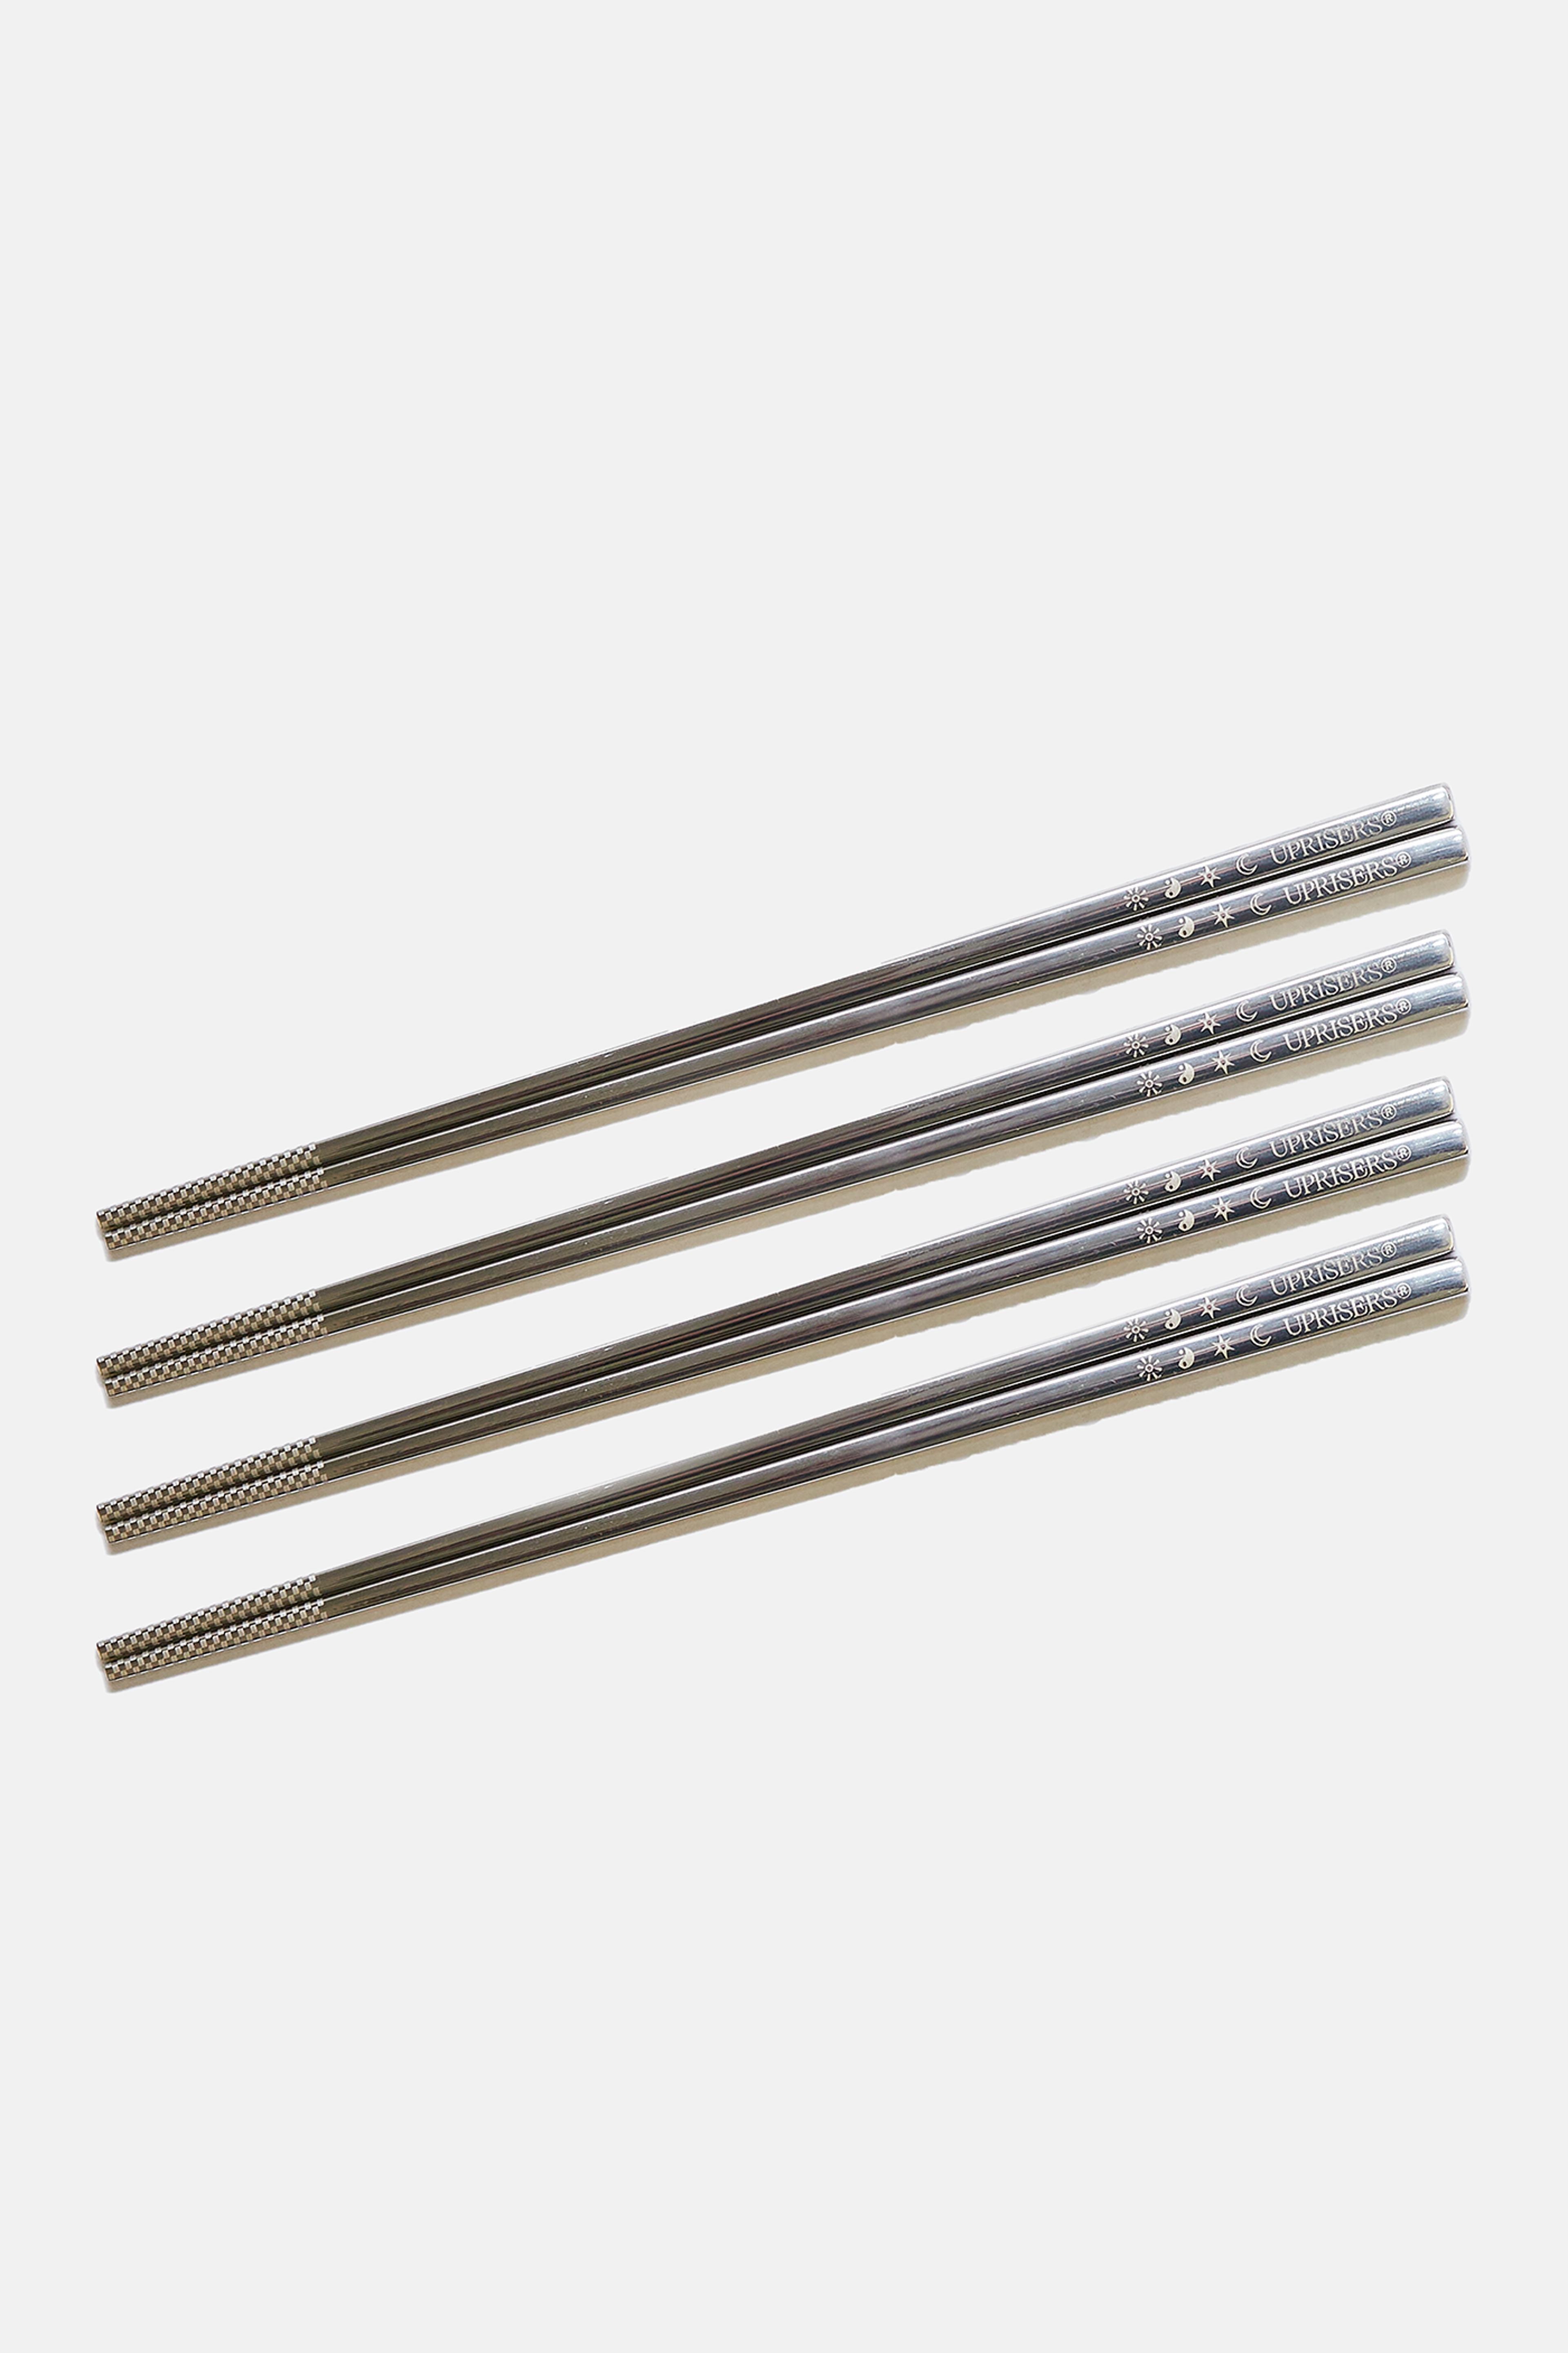 Alternate View 5 of UPRISERS Stainless Steel Chopsticks